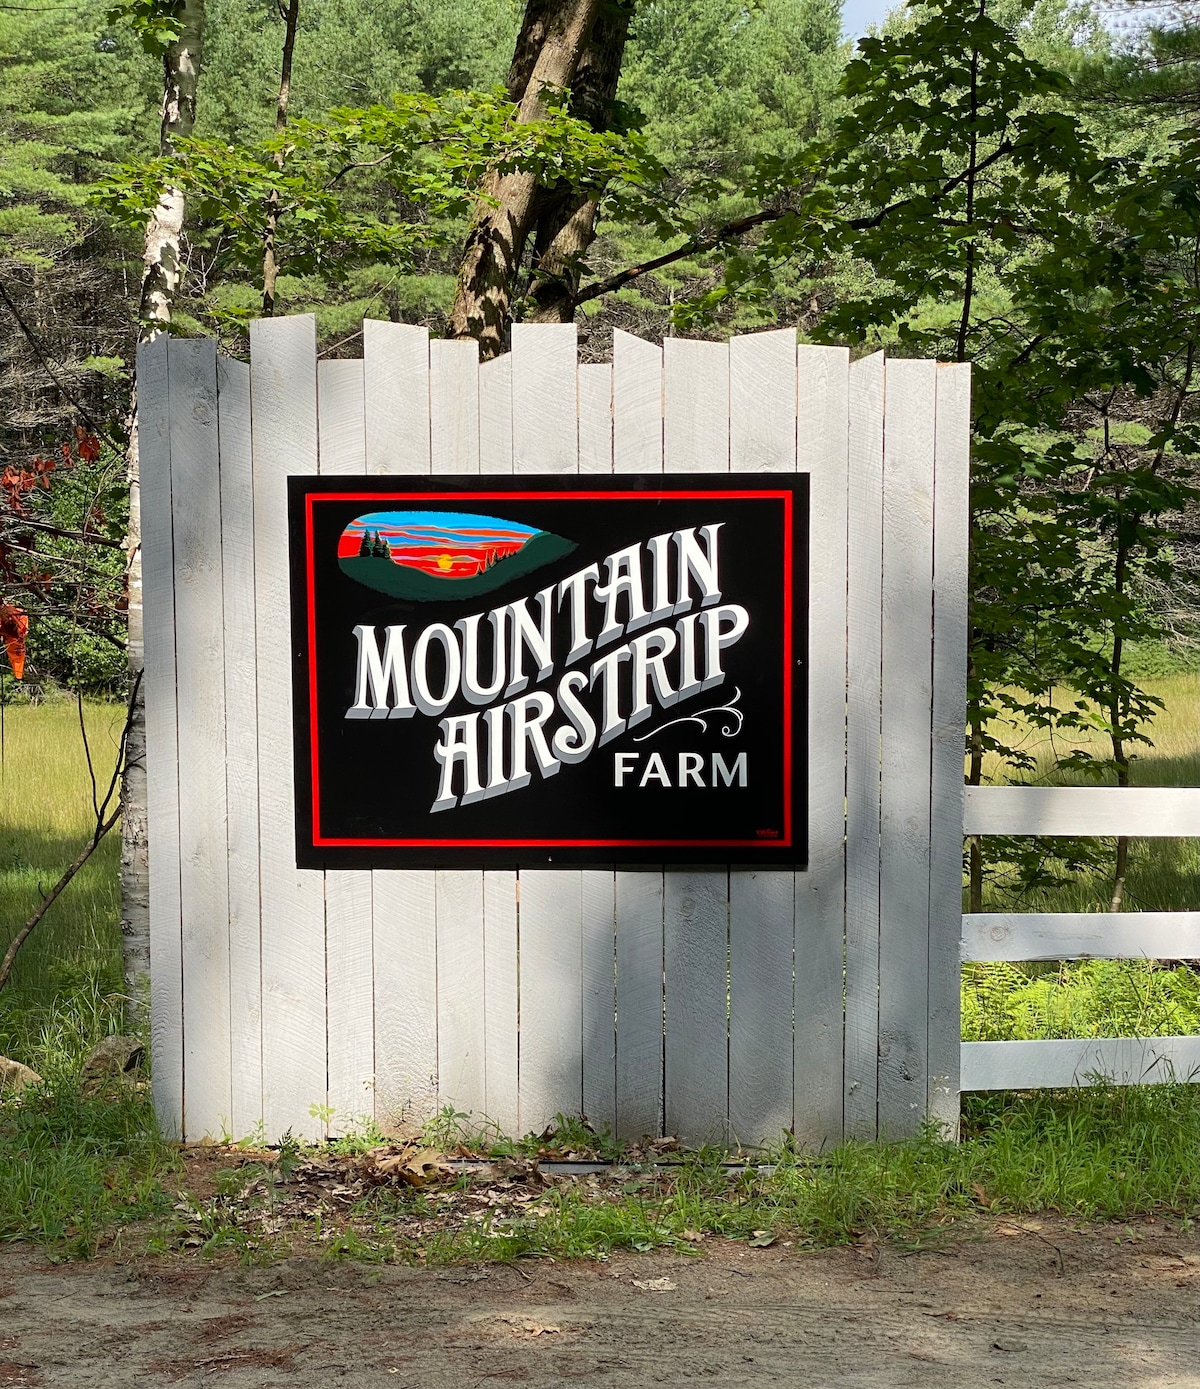 The Mountain Airstrip Farm